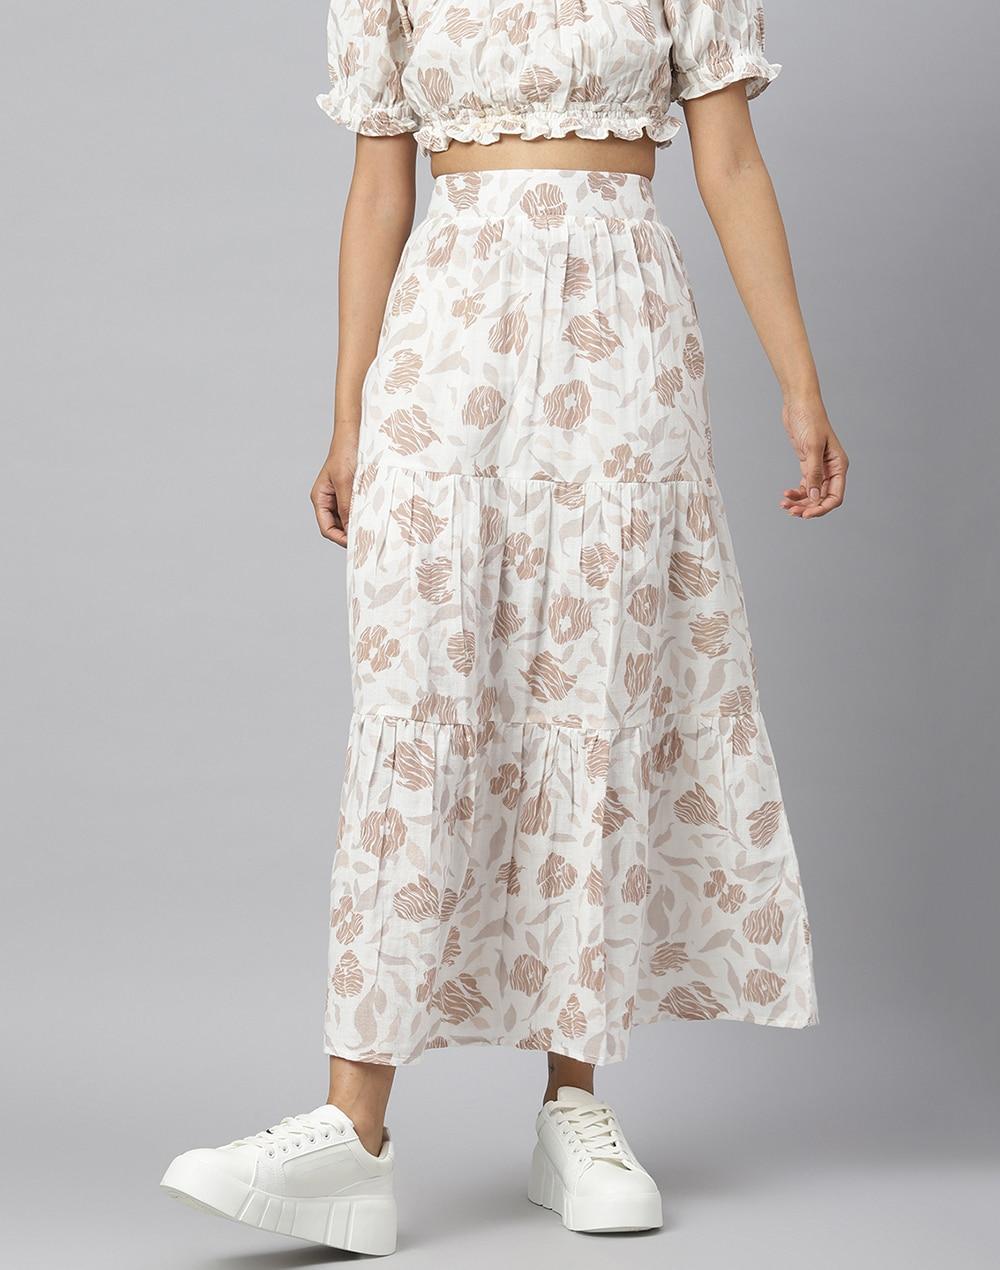 fabnu-white-cotton-printed-skirt